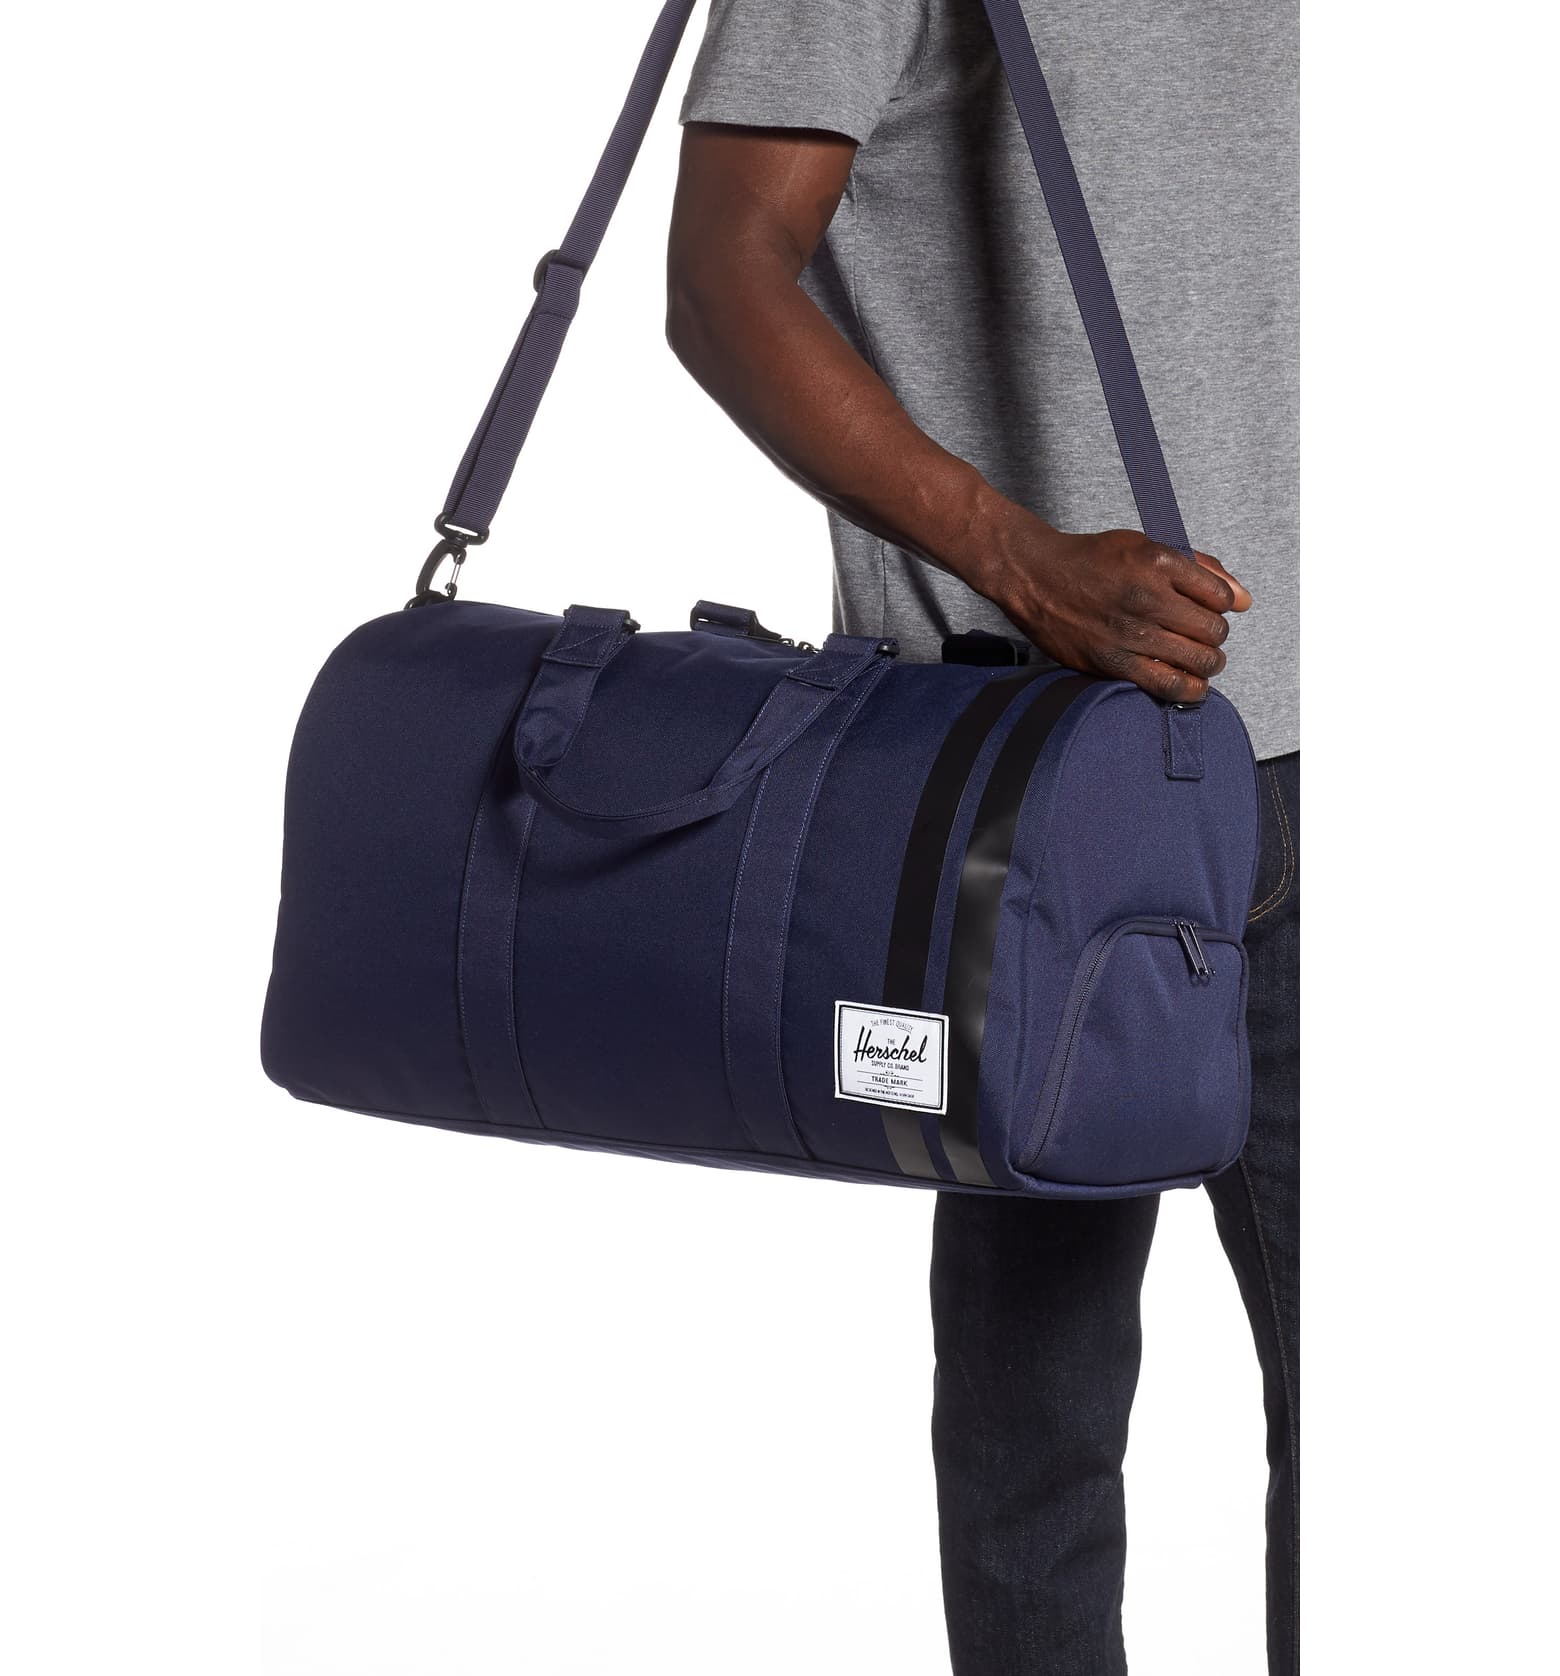 a person holding a blue duffel bag